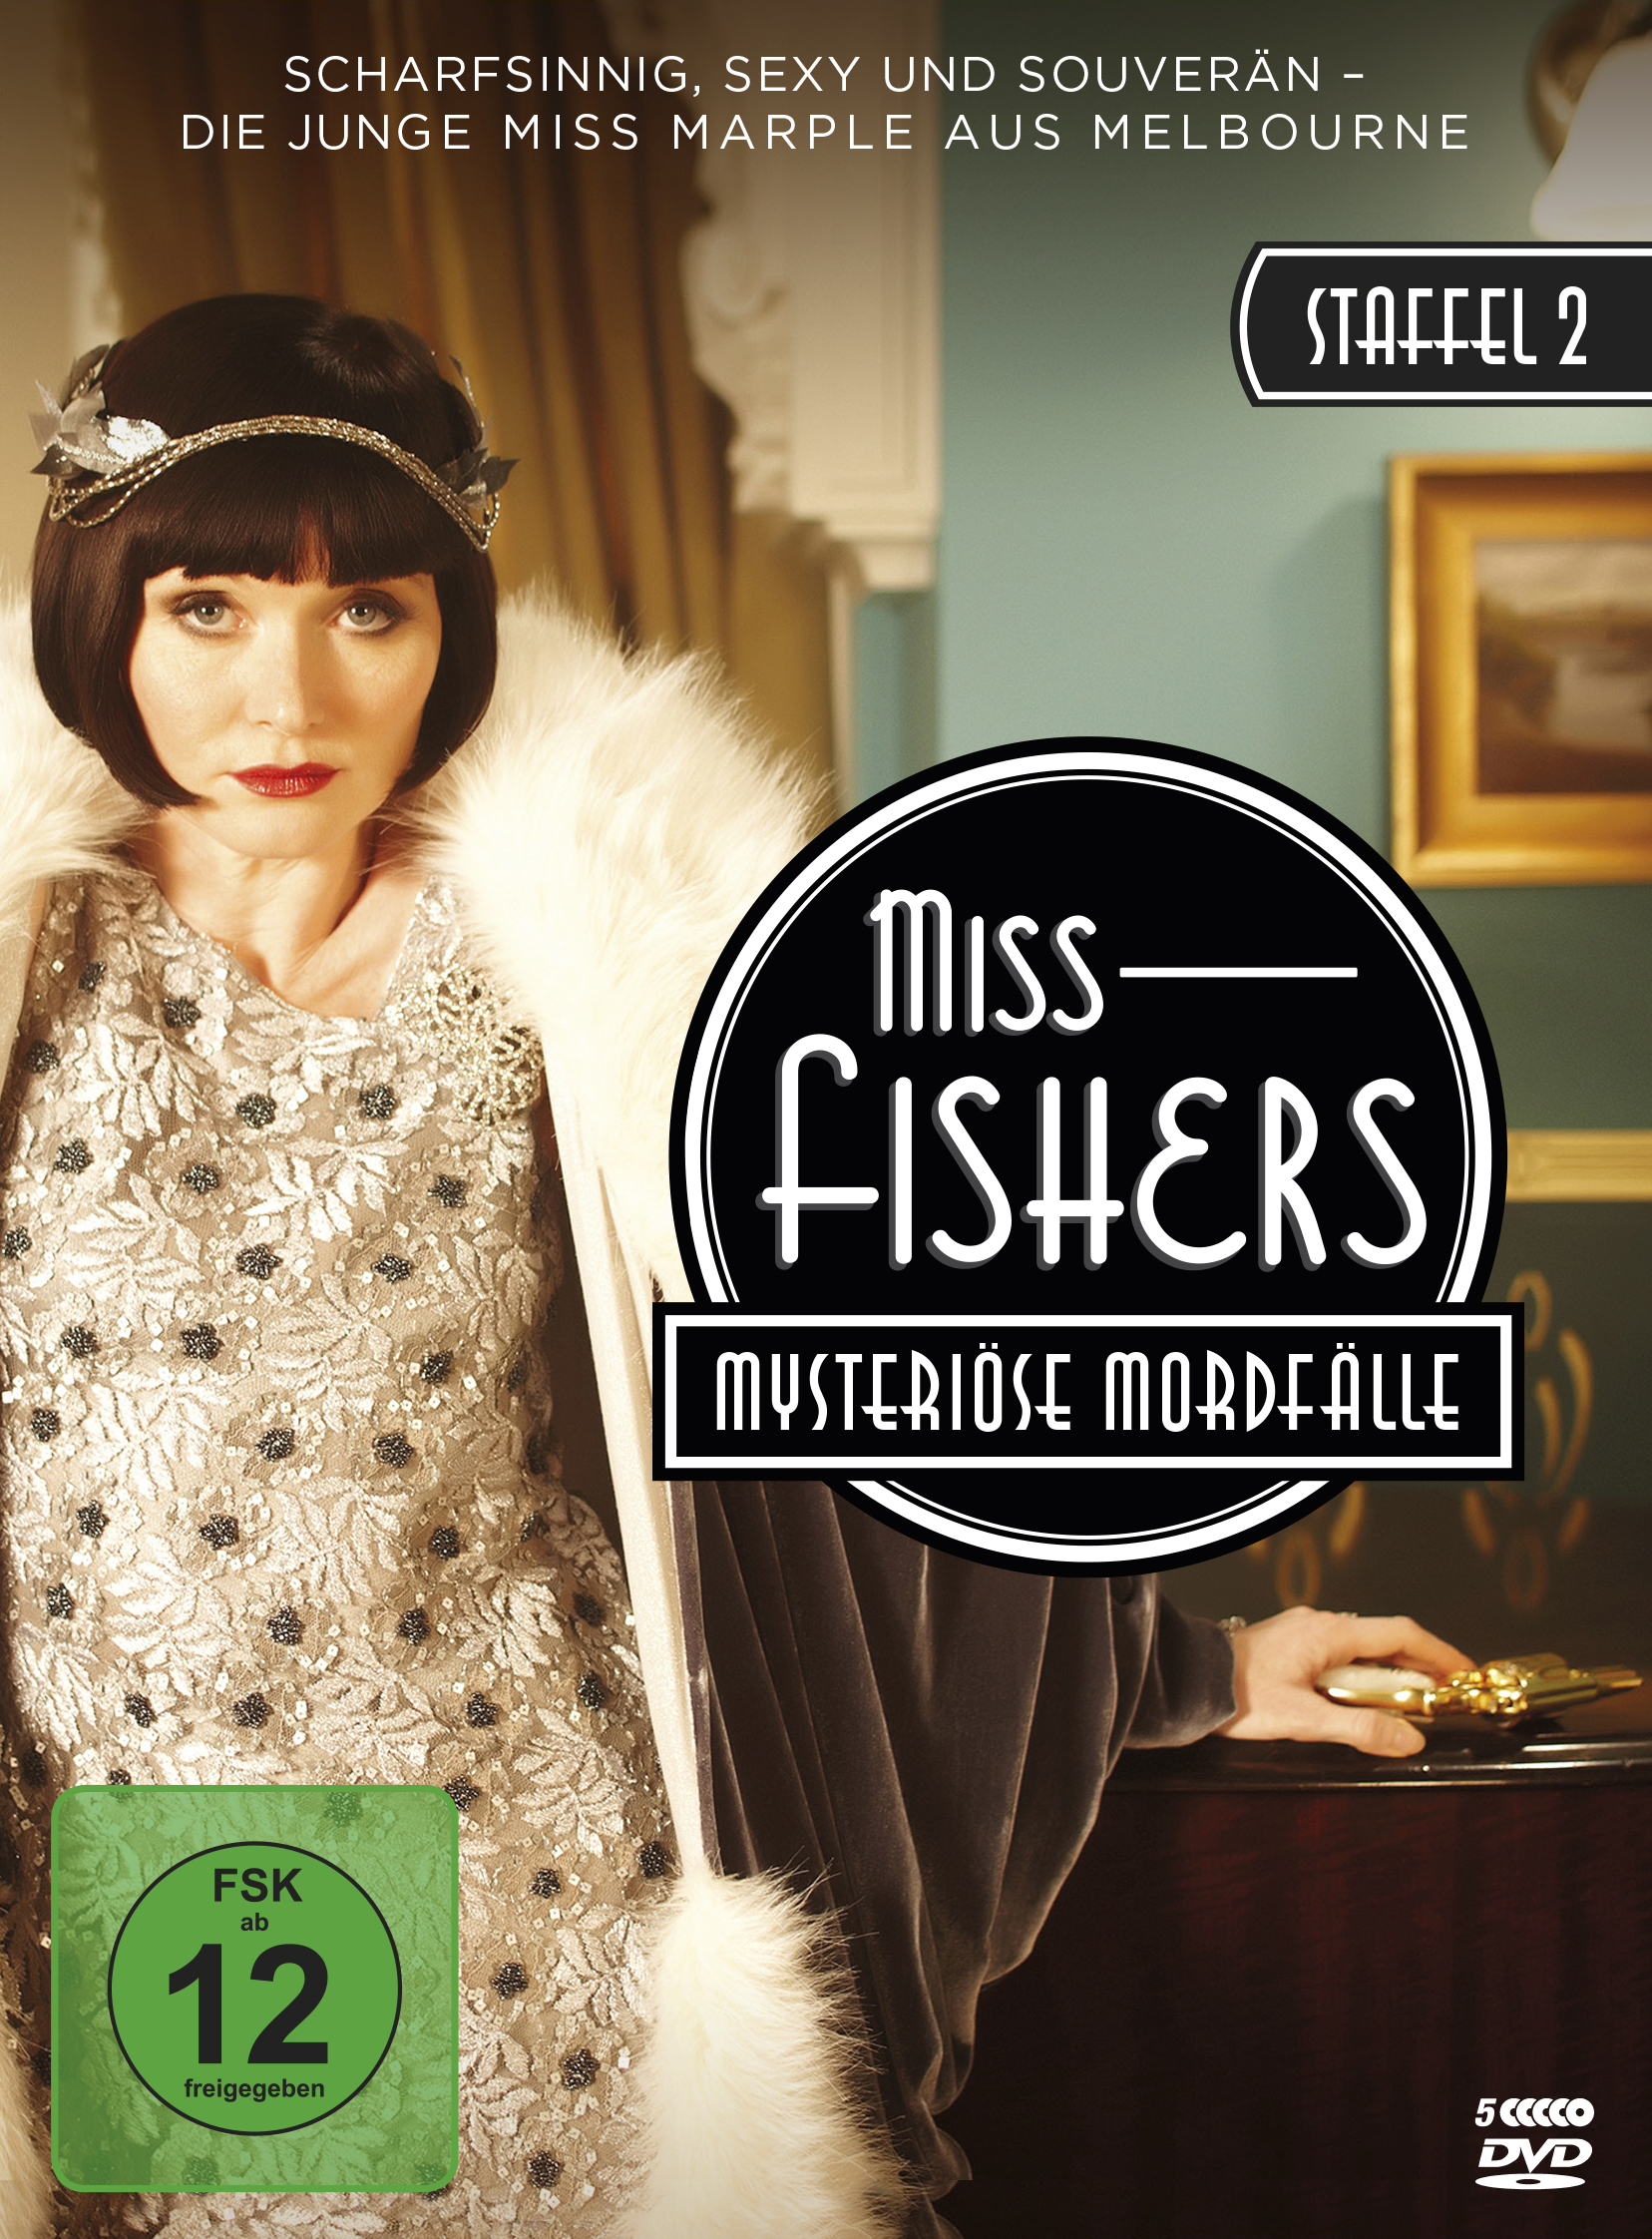 Staffel mysteriöse Mordfälle 2 Miss DVD Fishers -